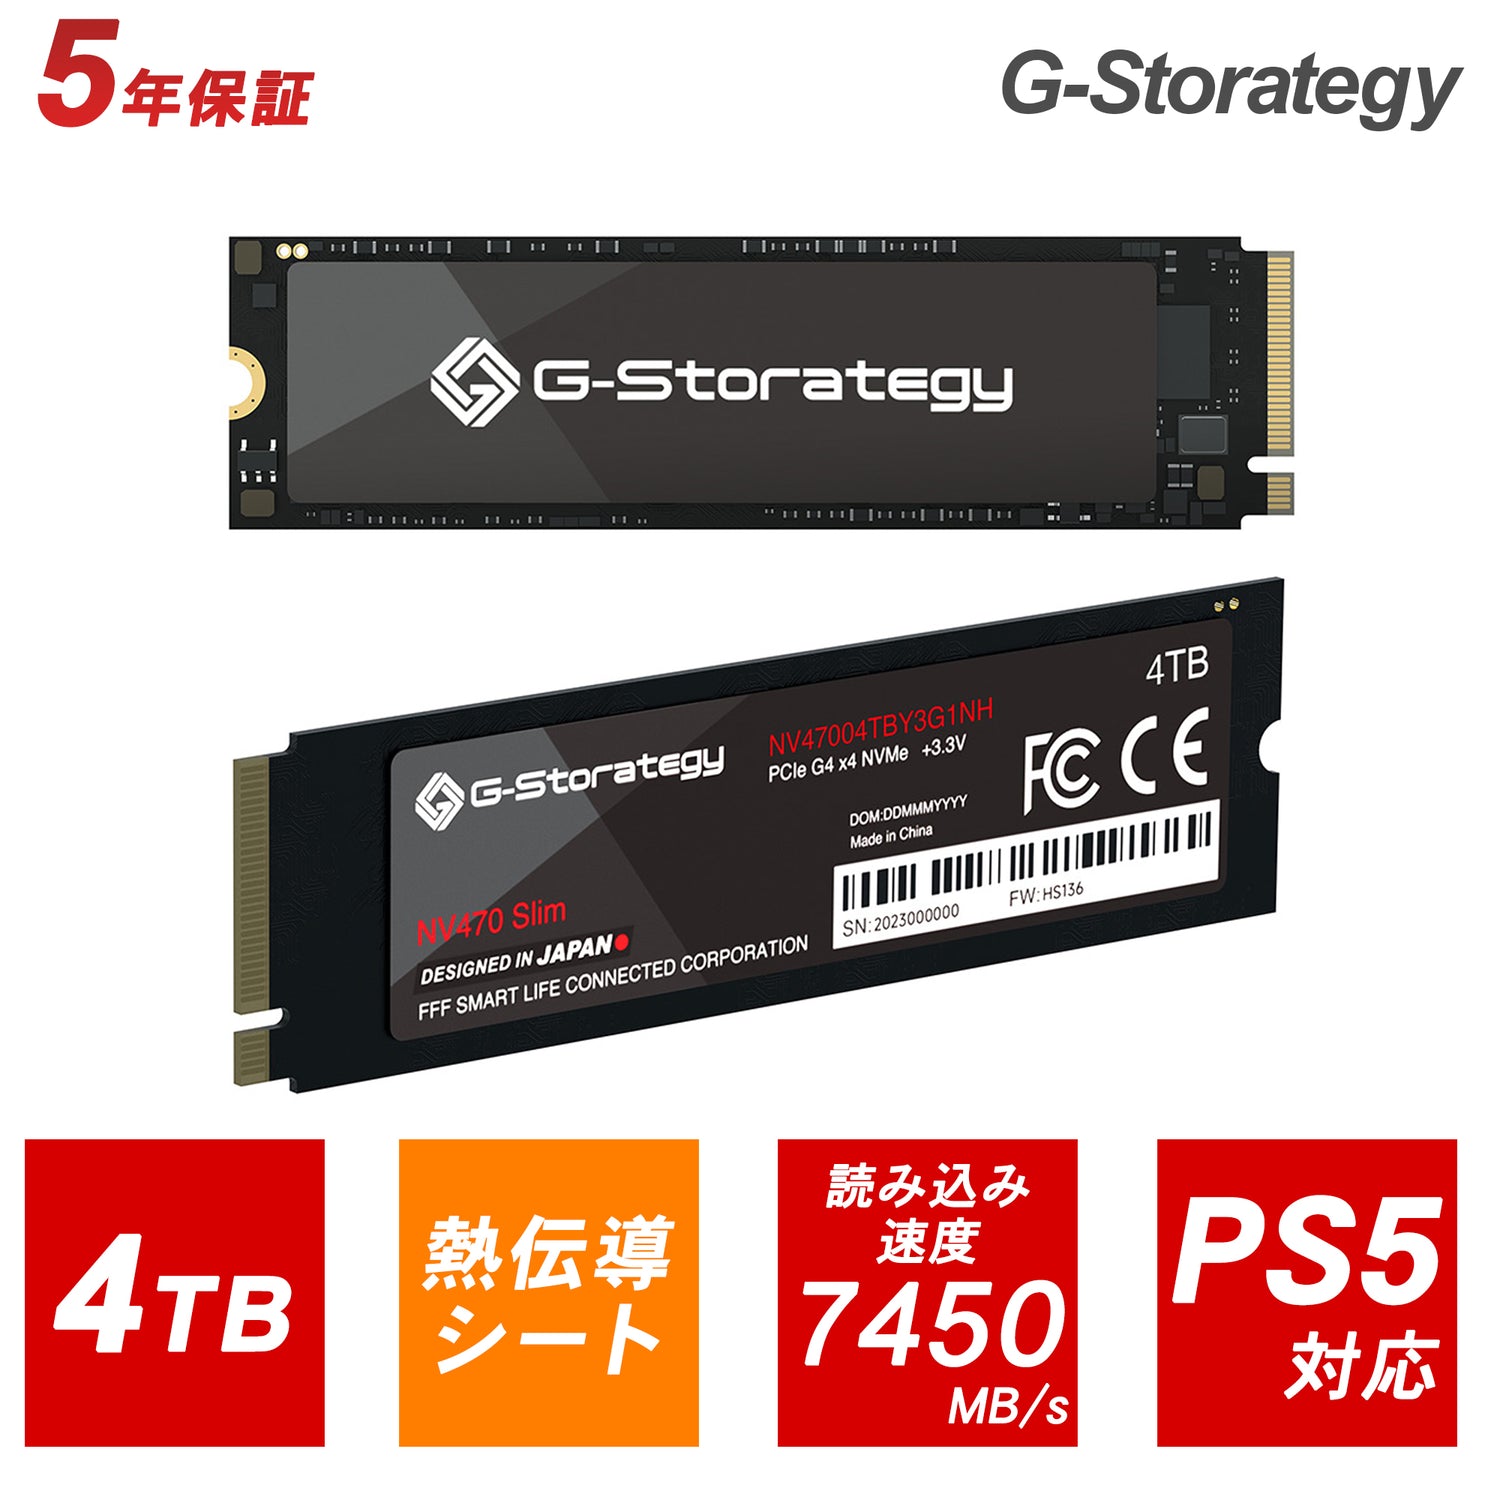 G-Storategy SSD 4TB PS5対応 銅熱伝導シート M.2 Gen4×4 NVMe 5年保証 NV47004TBY3G1NH